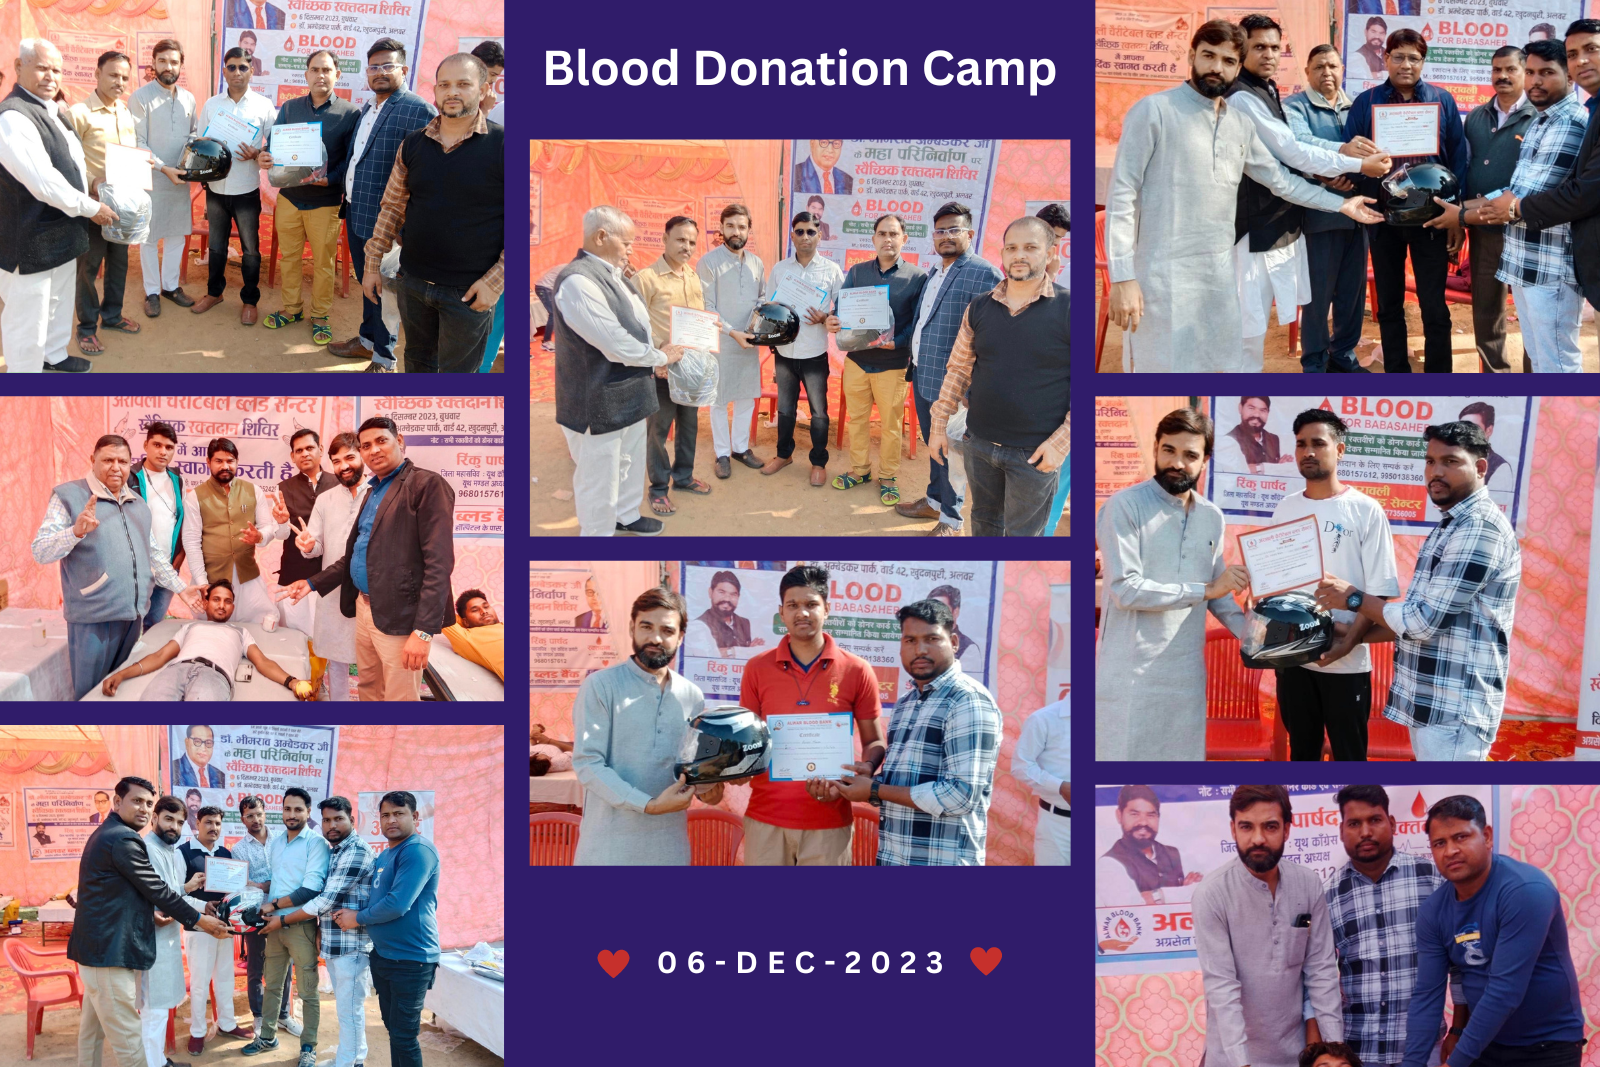 Commemorating Babasaheb’s Mahaparinirvan Diwas with a Blood Donation Camp